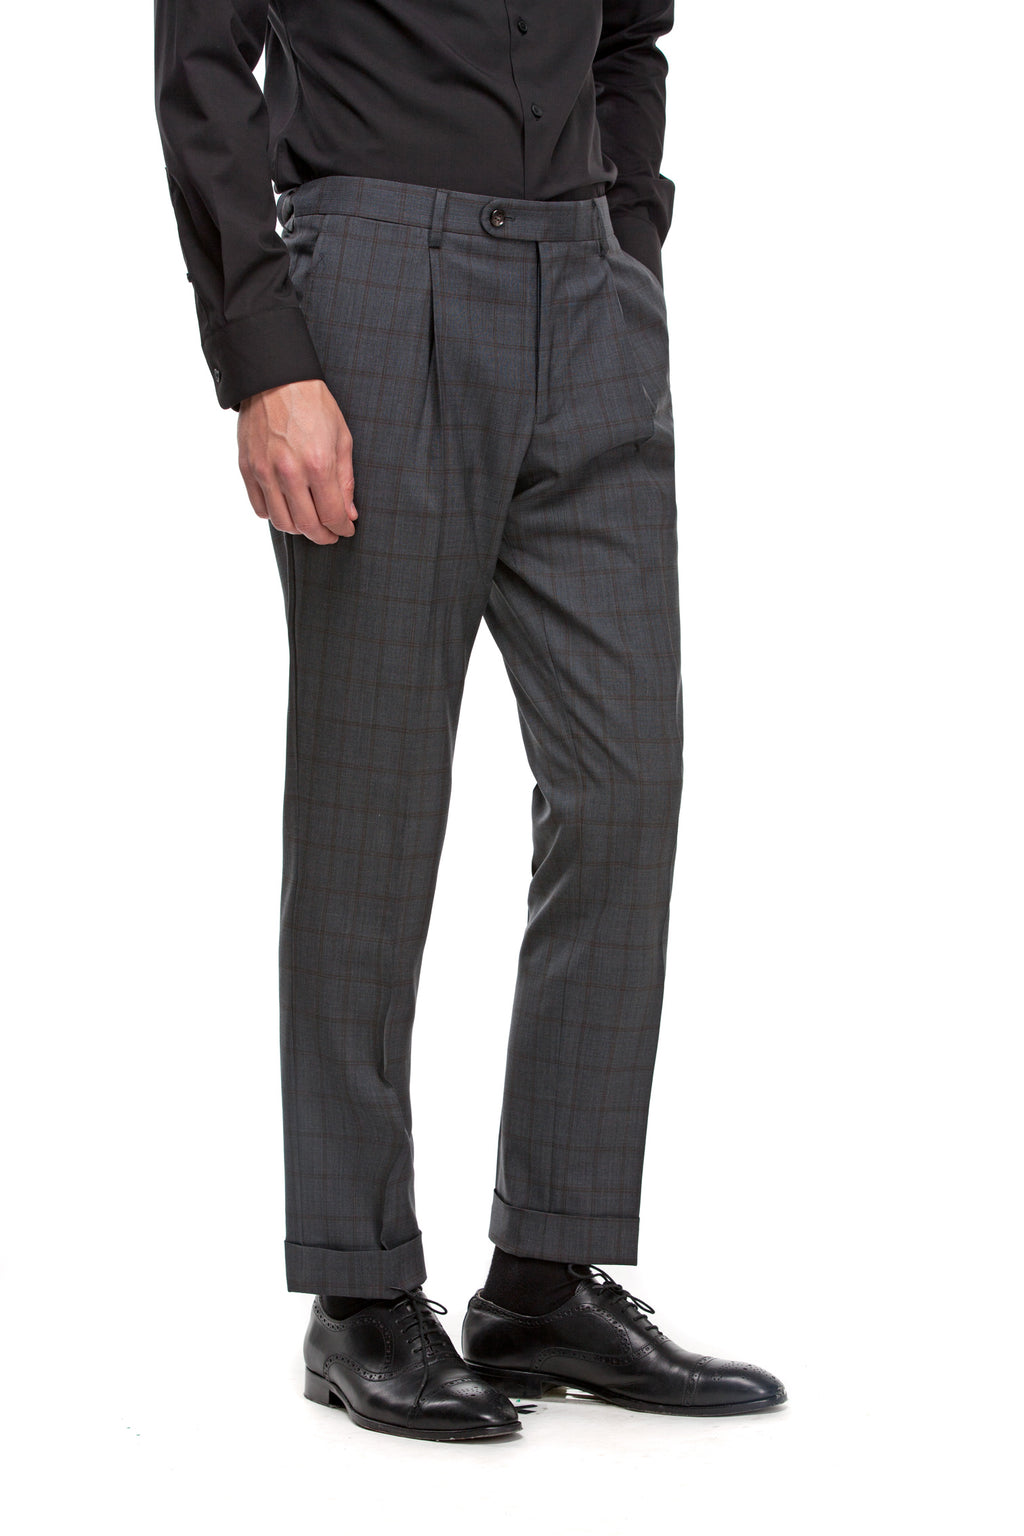 Custom Dark Grey Hem with Cuff Pants ottotos